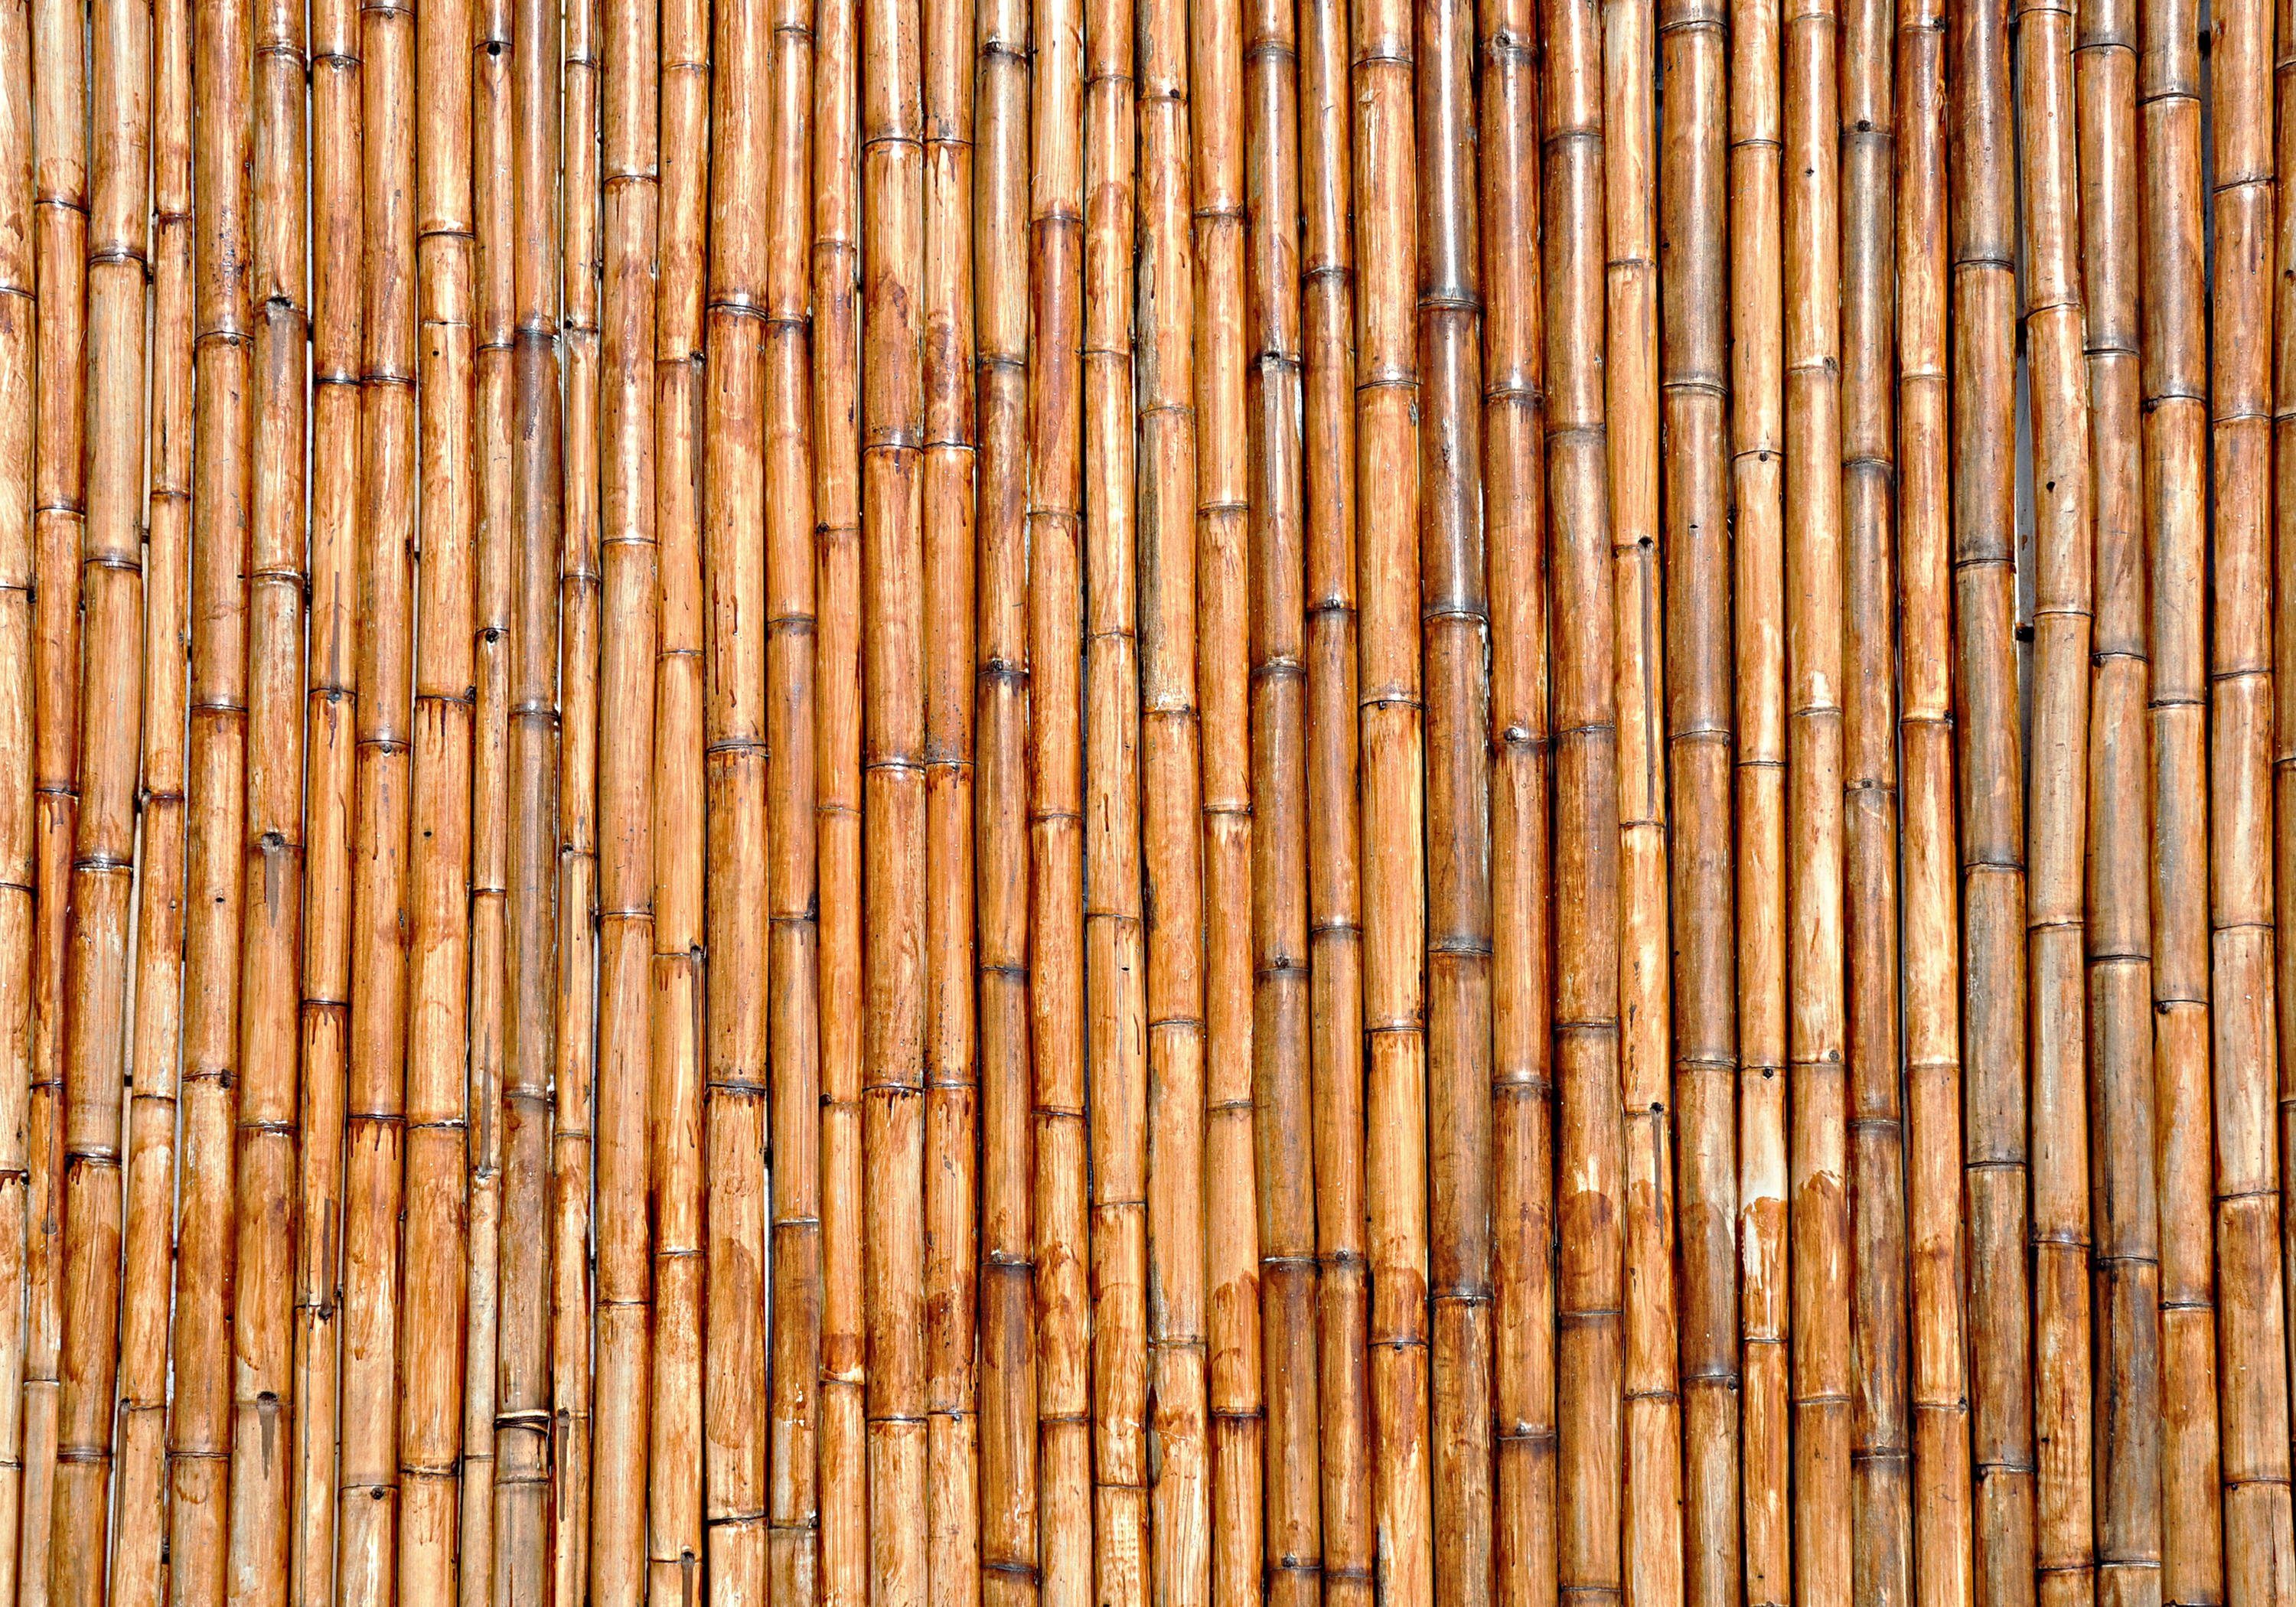 wandmotiv24 Fototapete Bambus Holz Natur, Vliestapete glatt, Motivtapete, matt, Wandtapete